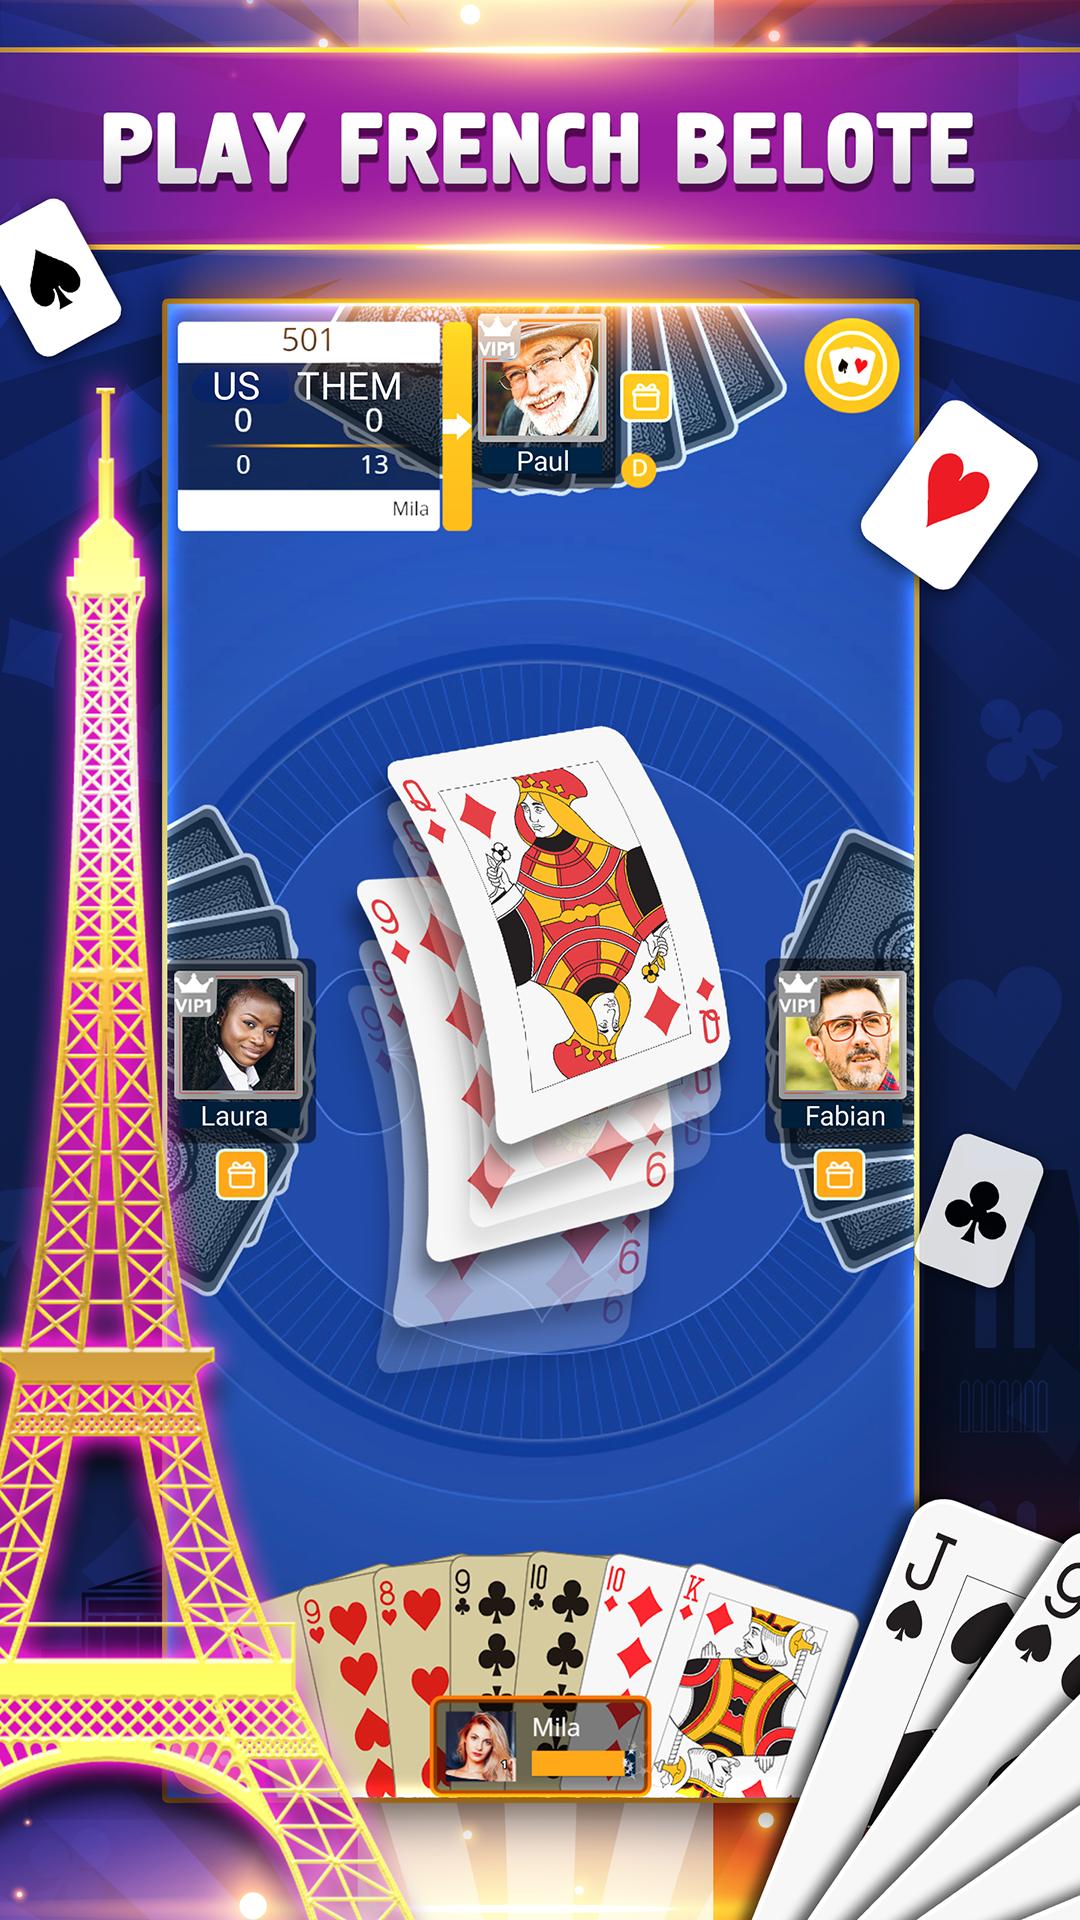 VIP Belote French Belote Online Multiplayer 3.9.0.77 Screenshot 1